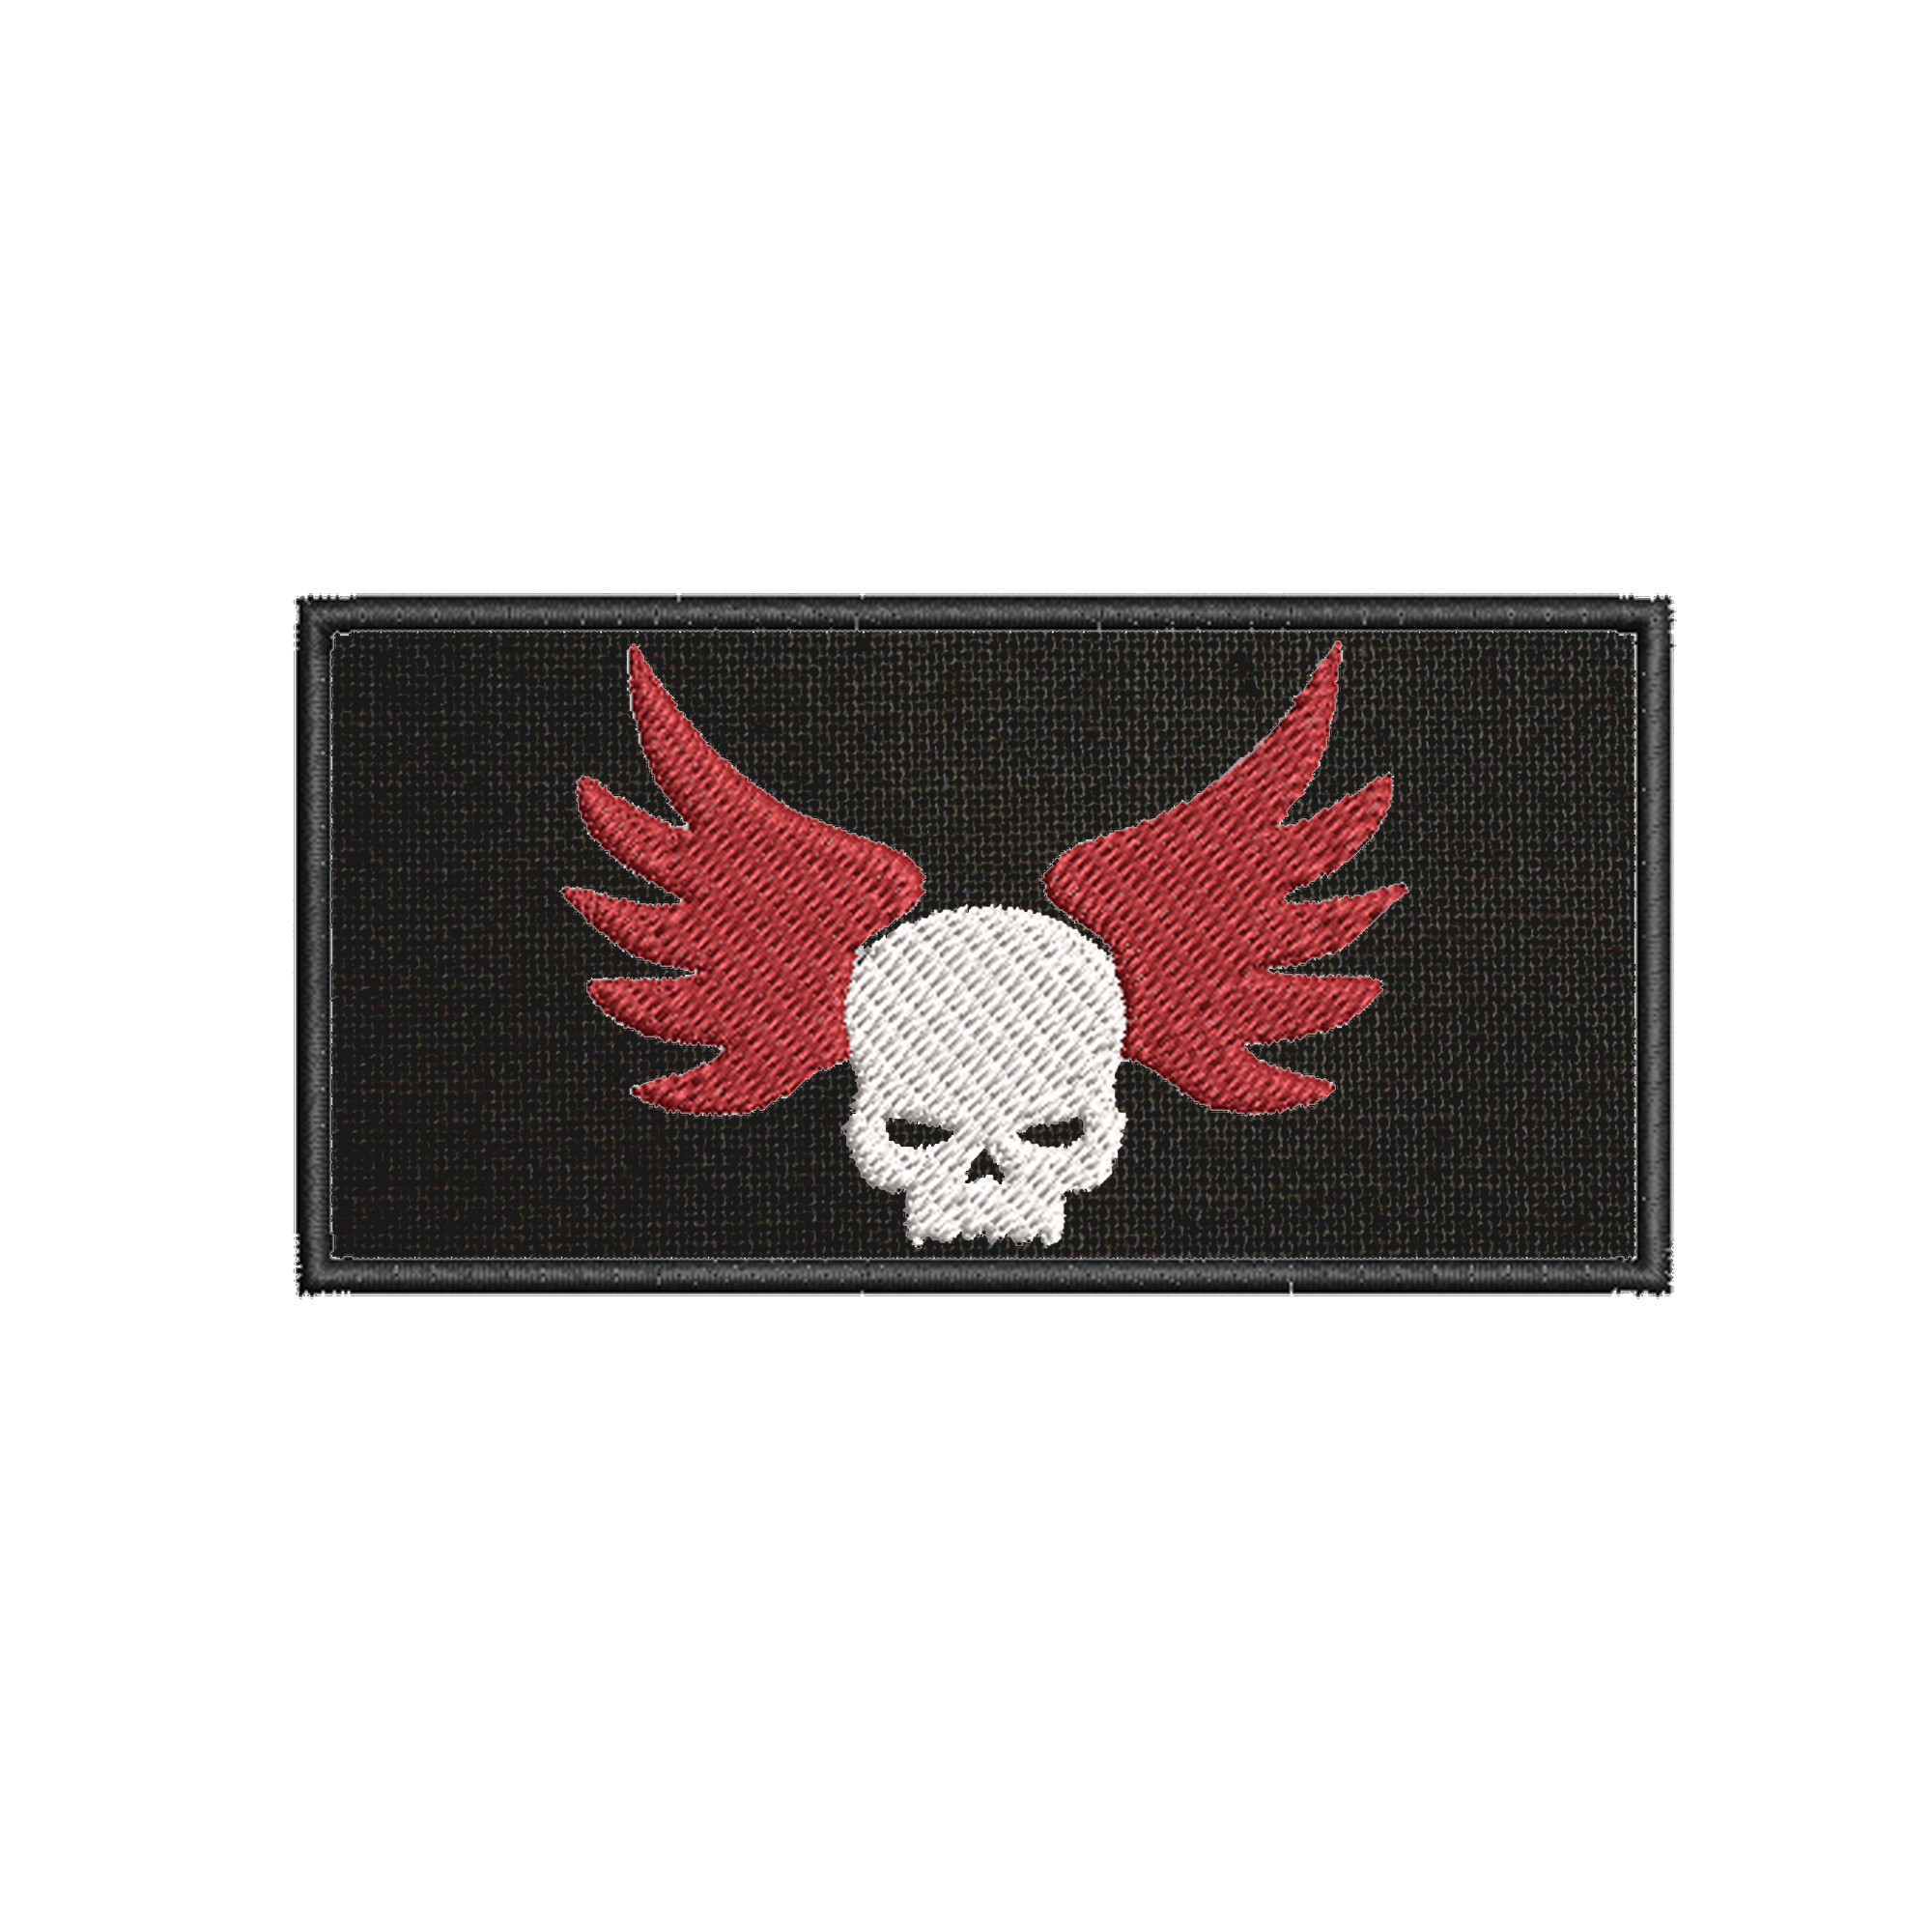 Angel Sanguine Warhammer 40k Embroidered Patch Iron-On Applique, Cosplay Vest Clothing Badge Back Packs Uniform, Geeks & Gamers, Table Top, Anime, Cartoon, Grim Dark DIY - image 1 of 1